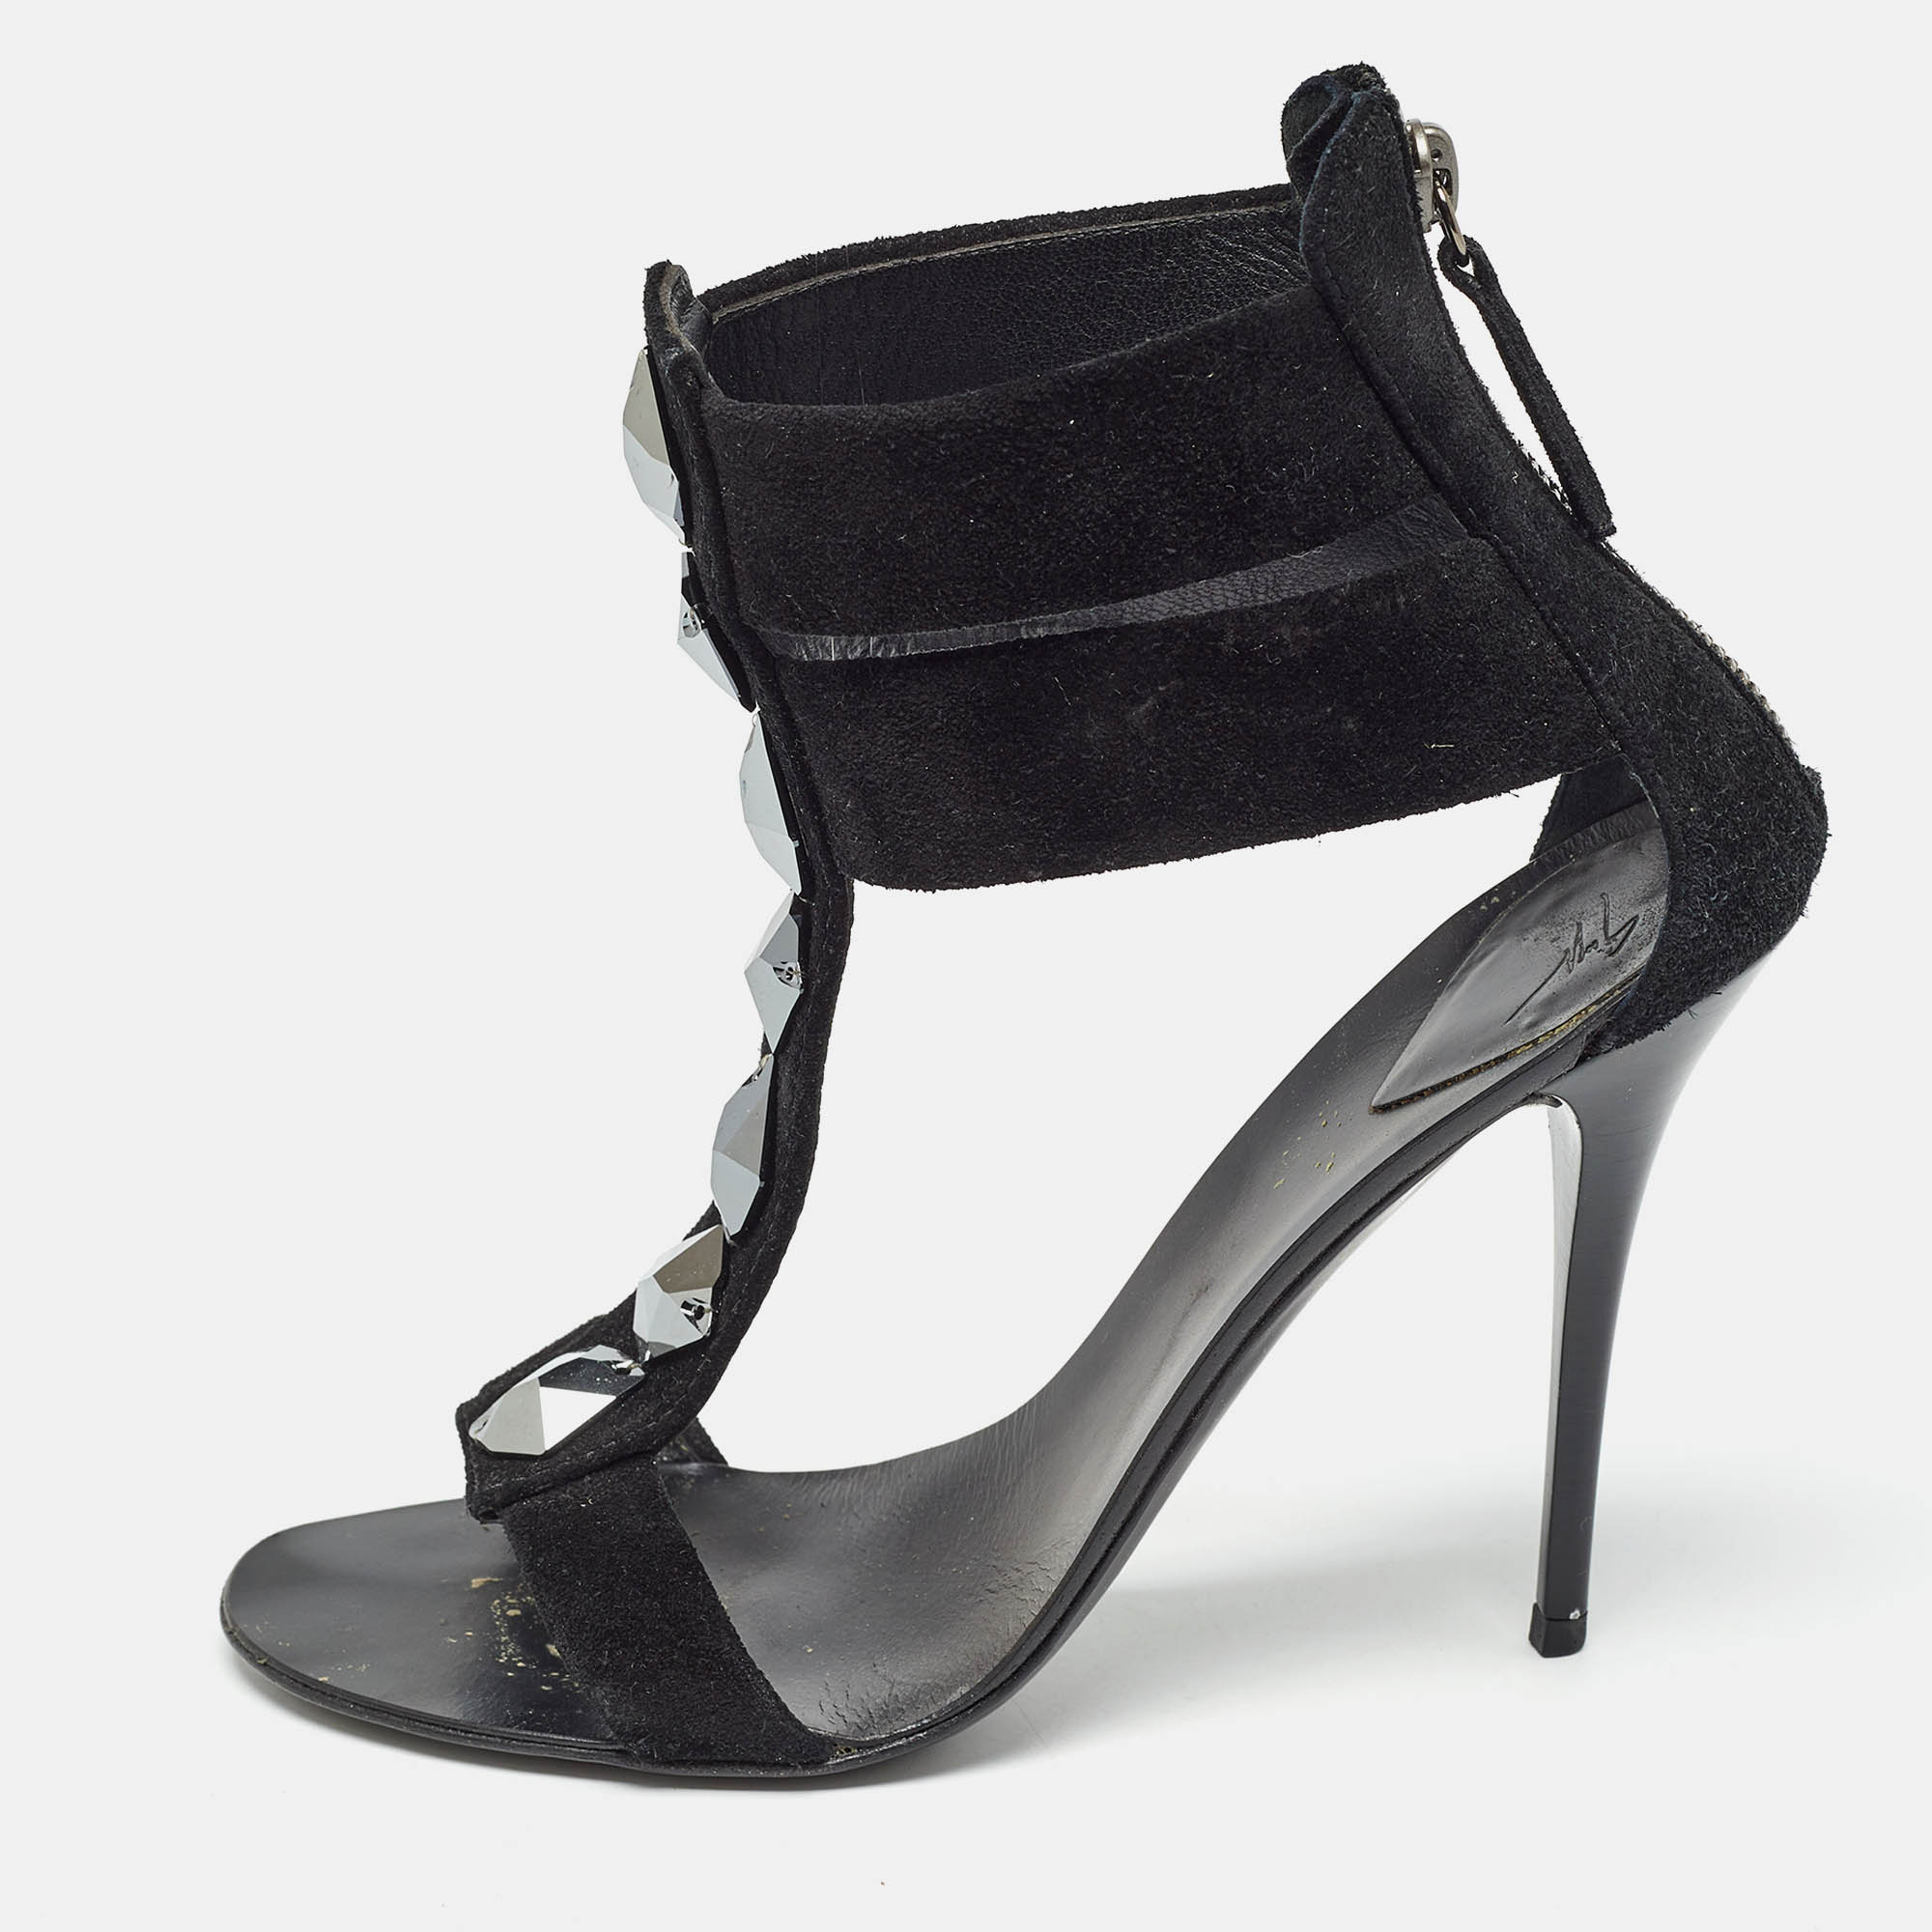 Giuseppe zanotti black suede crystal embellished t-bar ankle strap sandals size 37.5